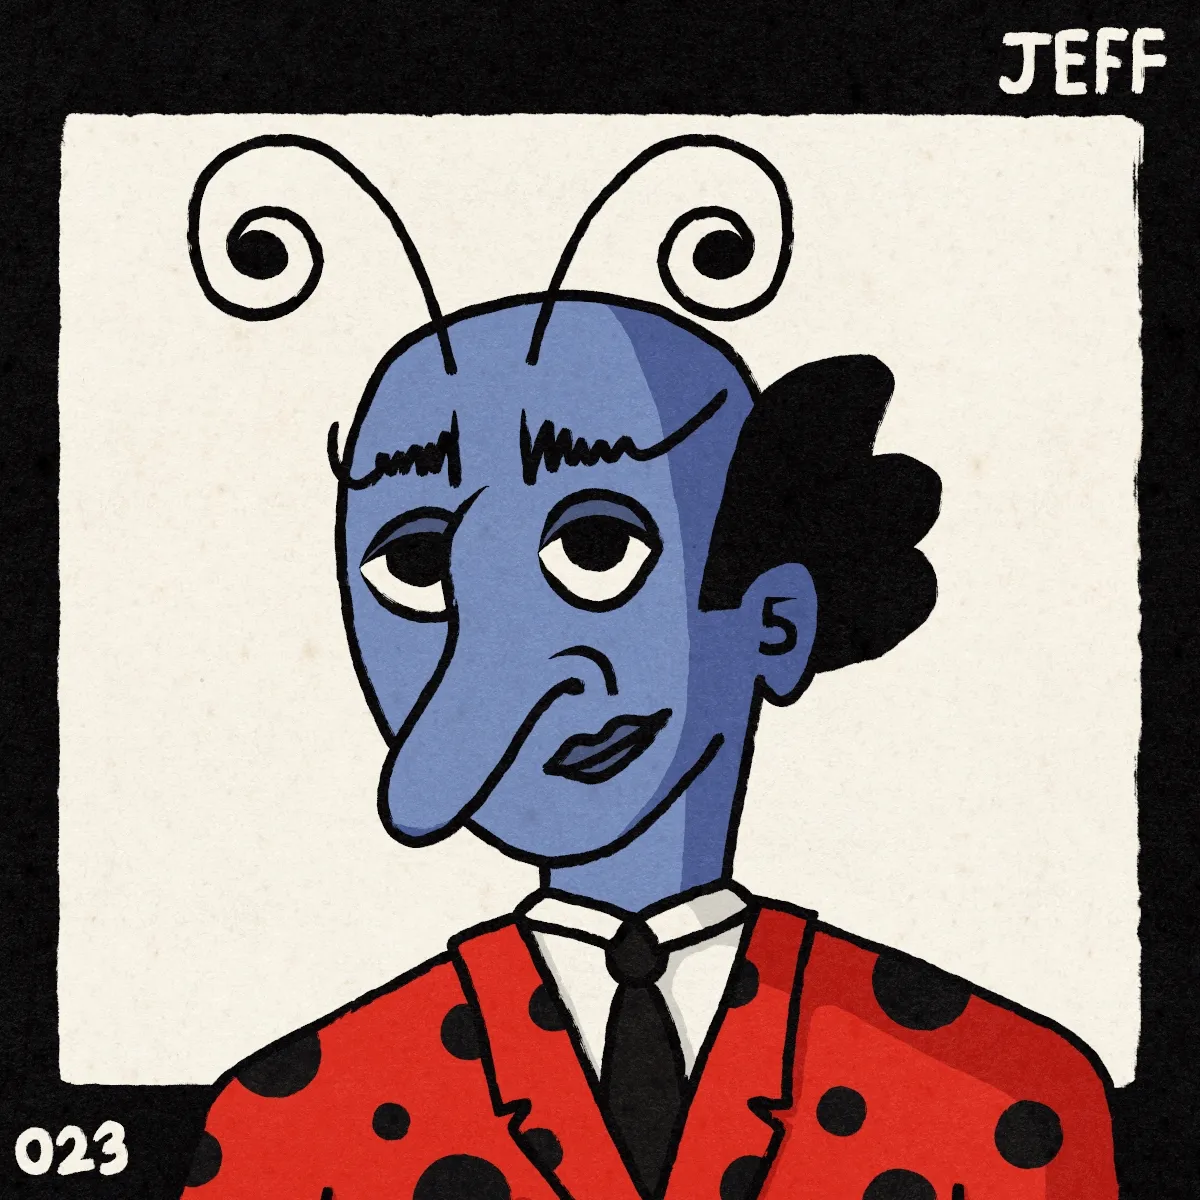 JEFF 023